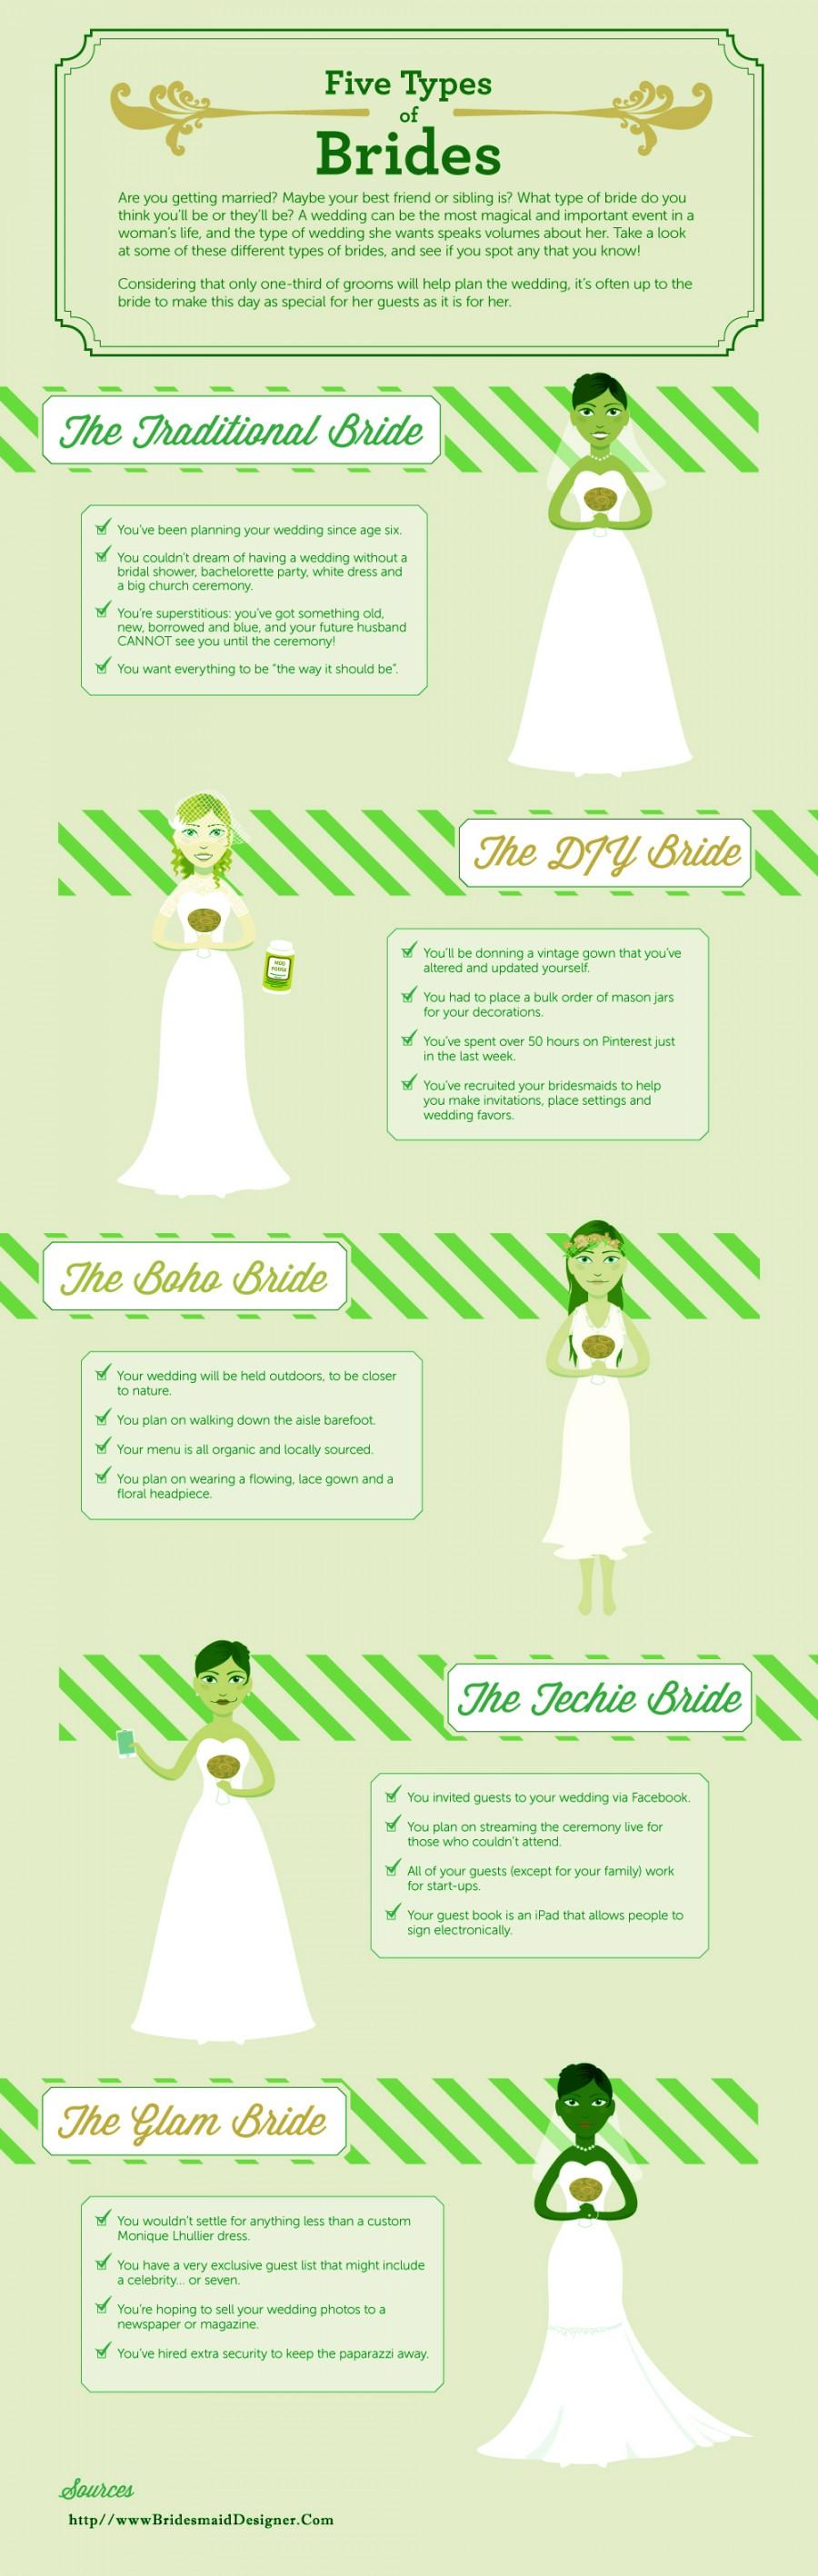 Wedding - Buy Cheap Bridesmaid Dresses Online